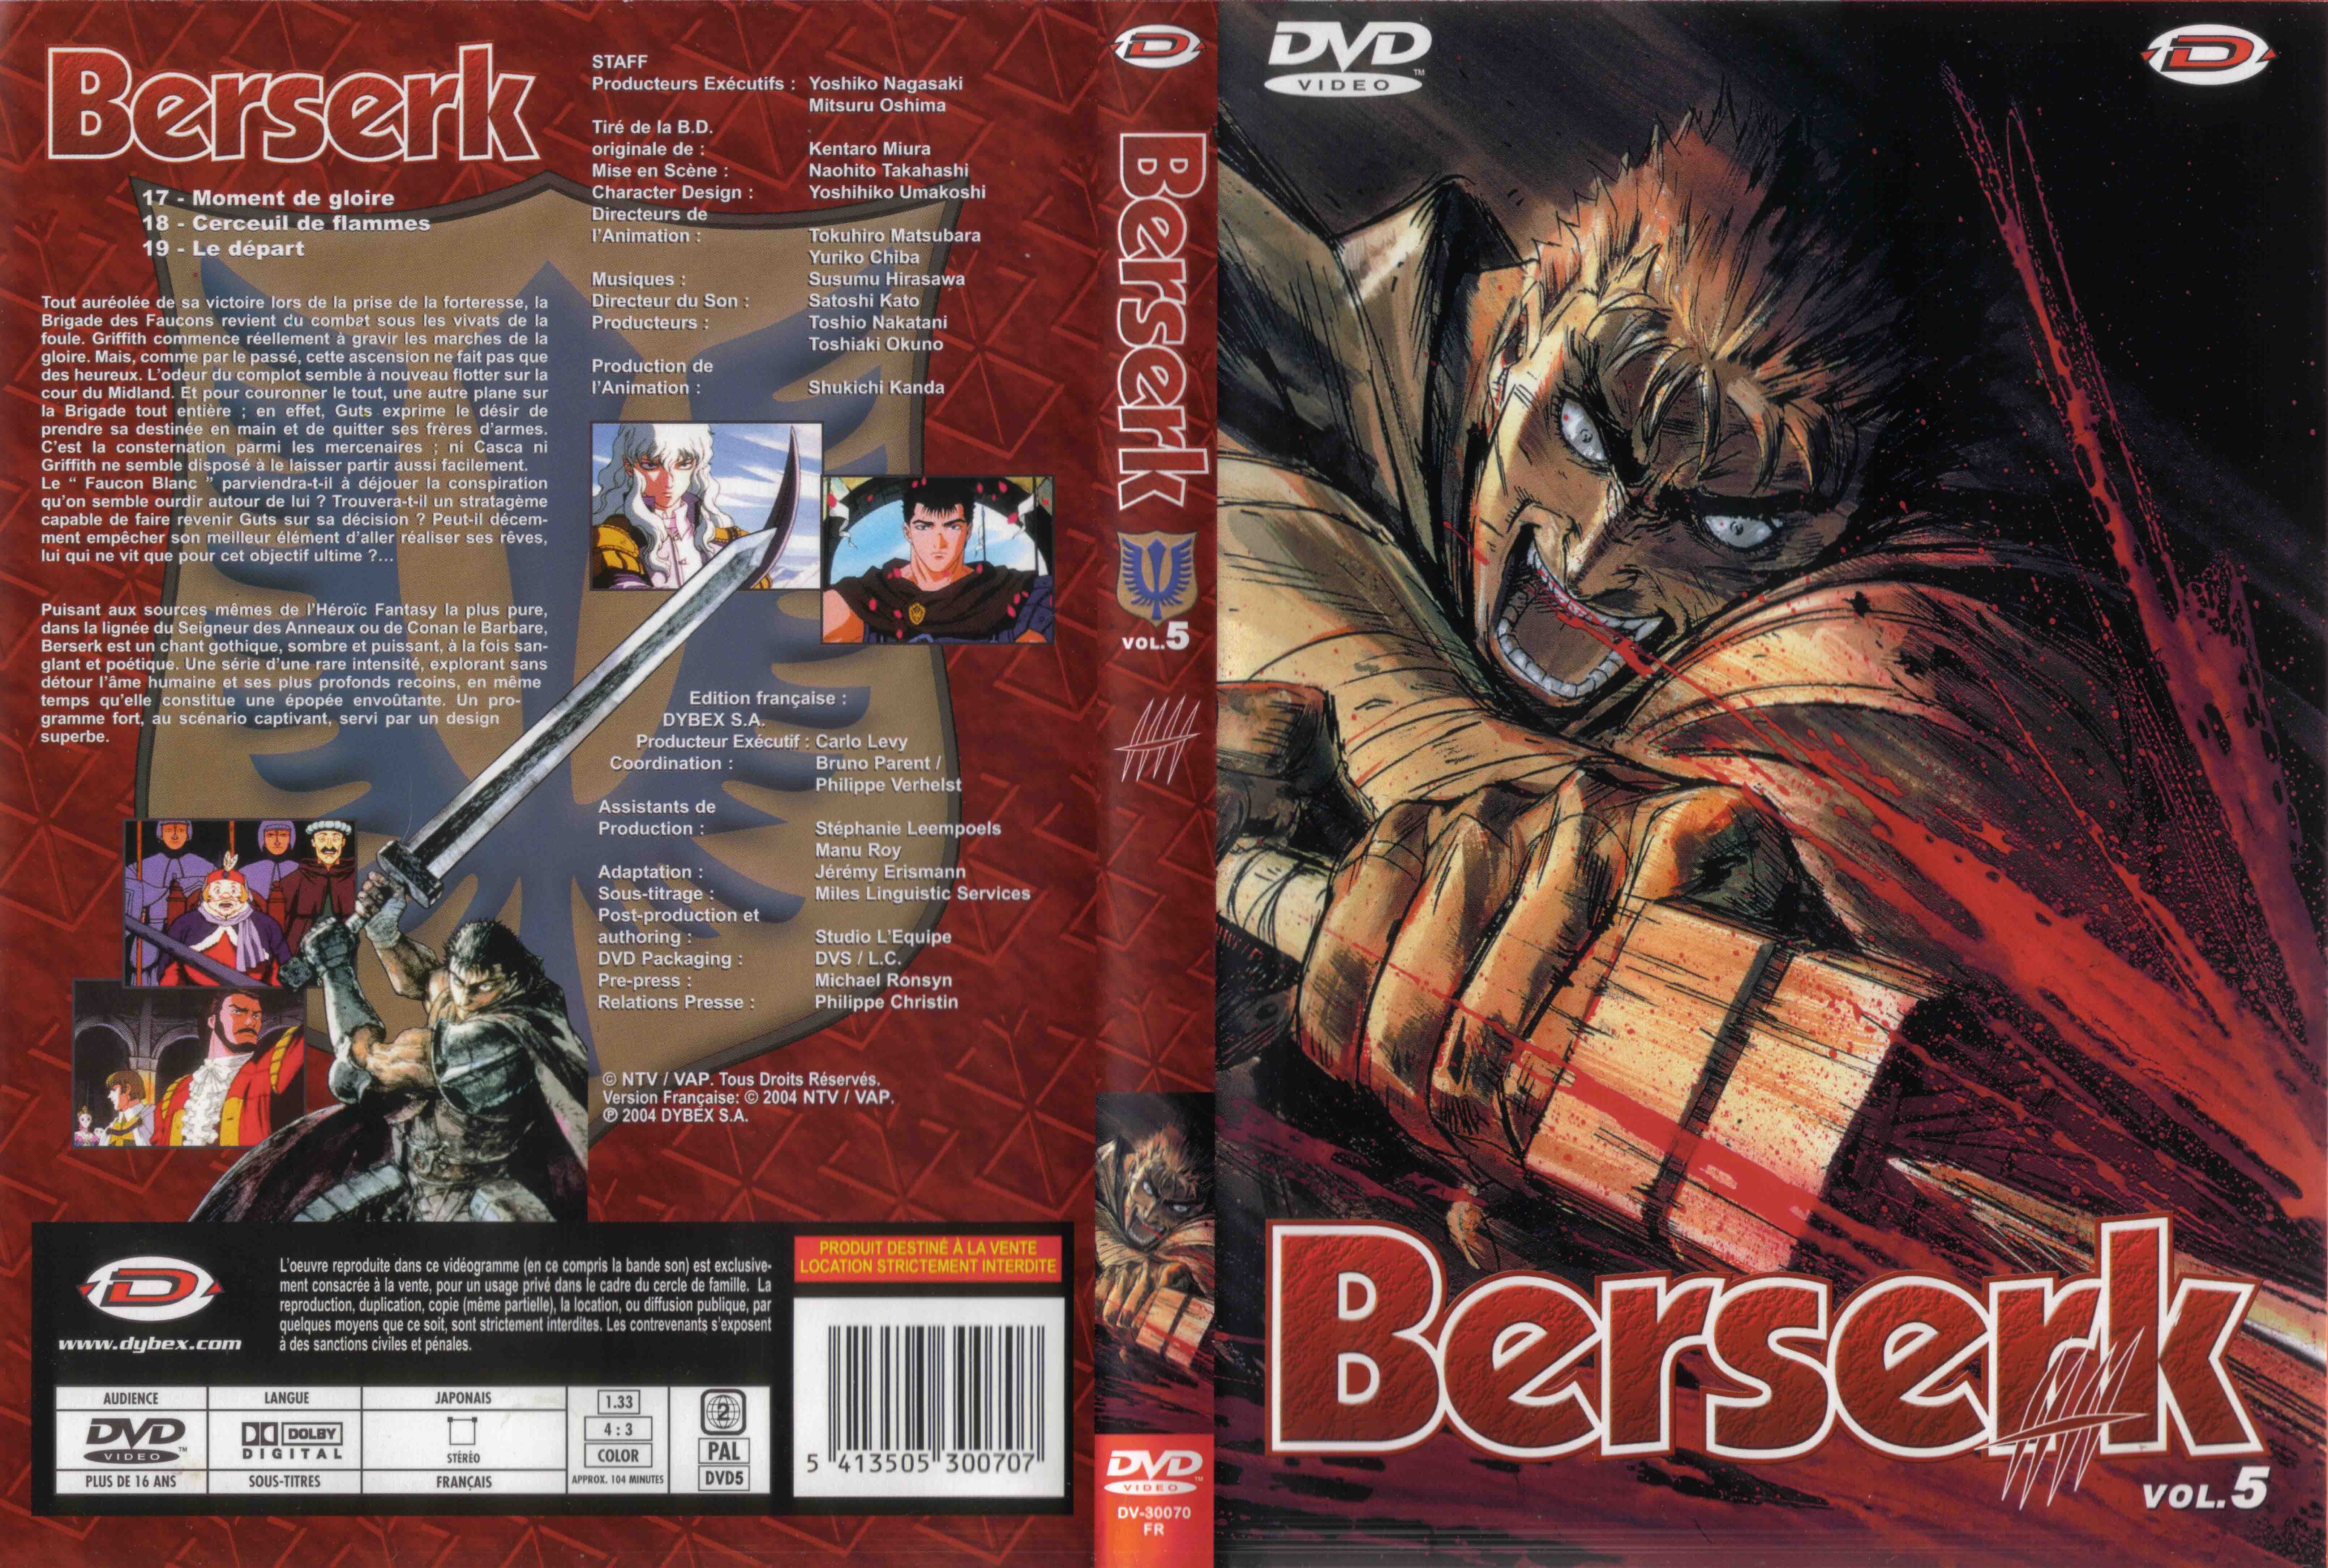 Jaquette DVD Berserk vol 5